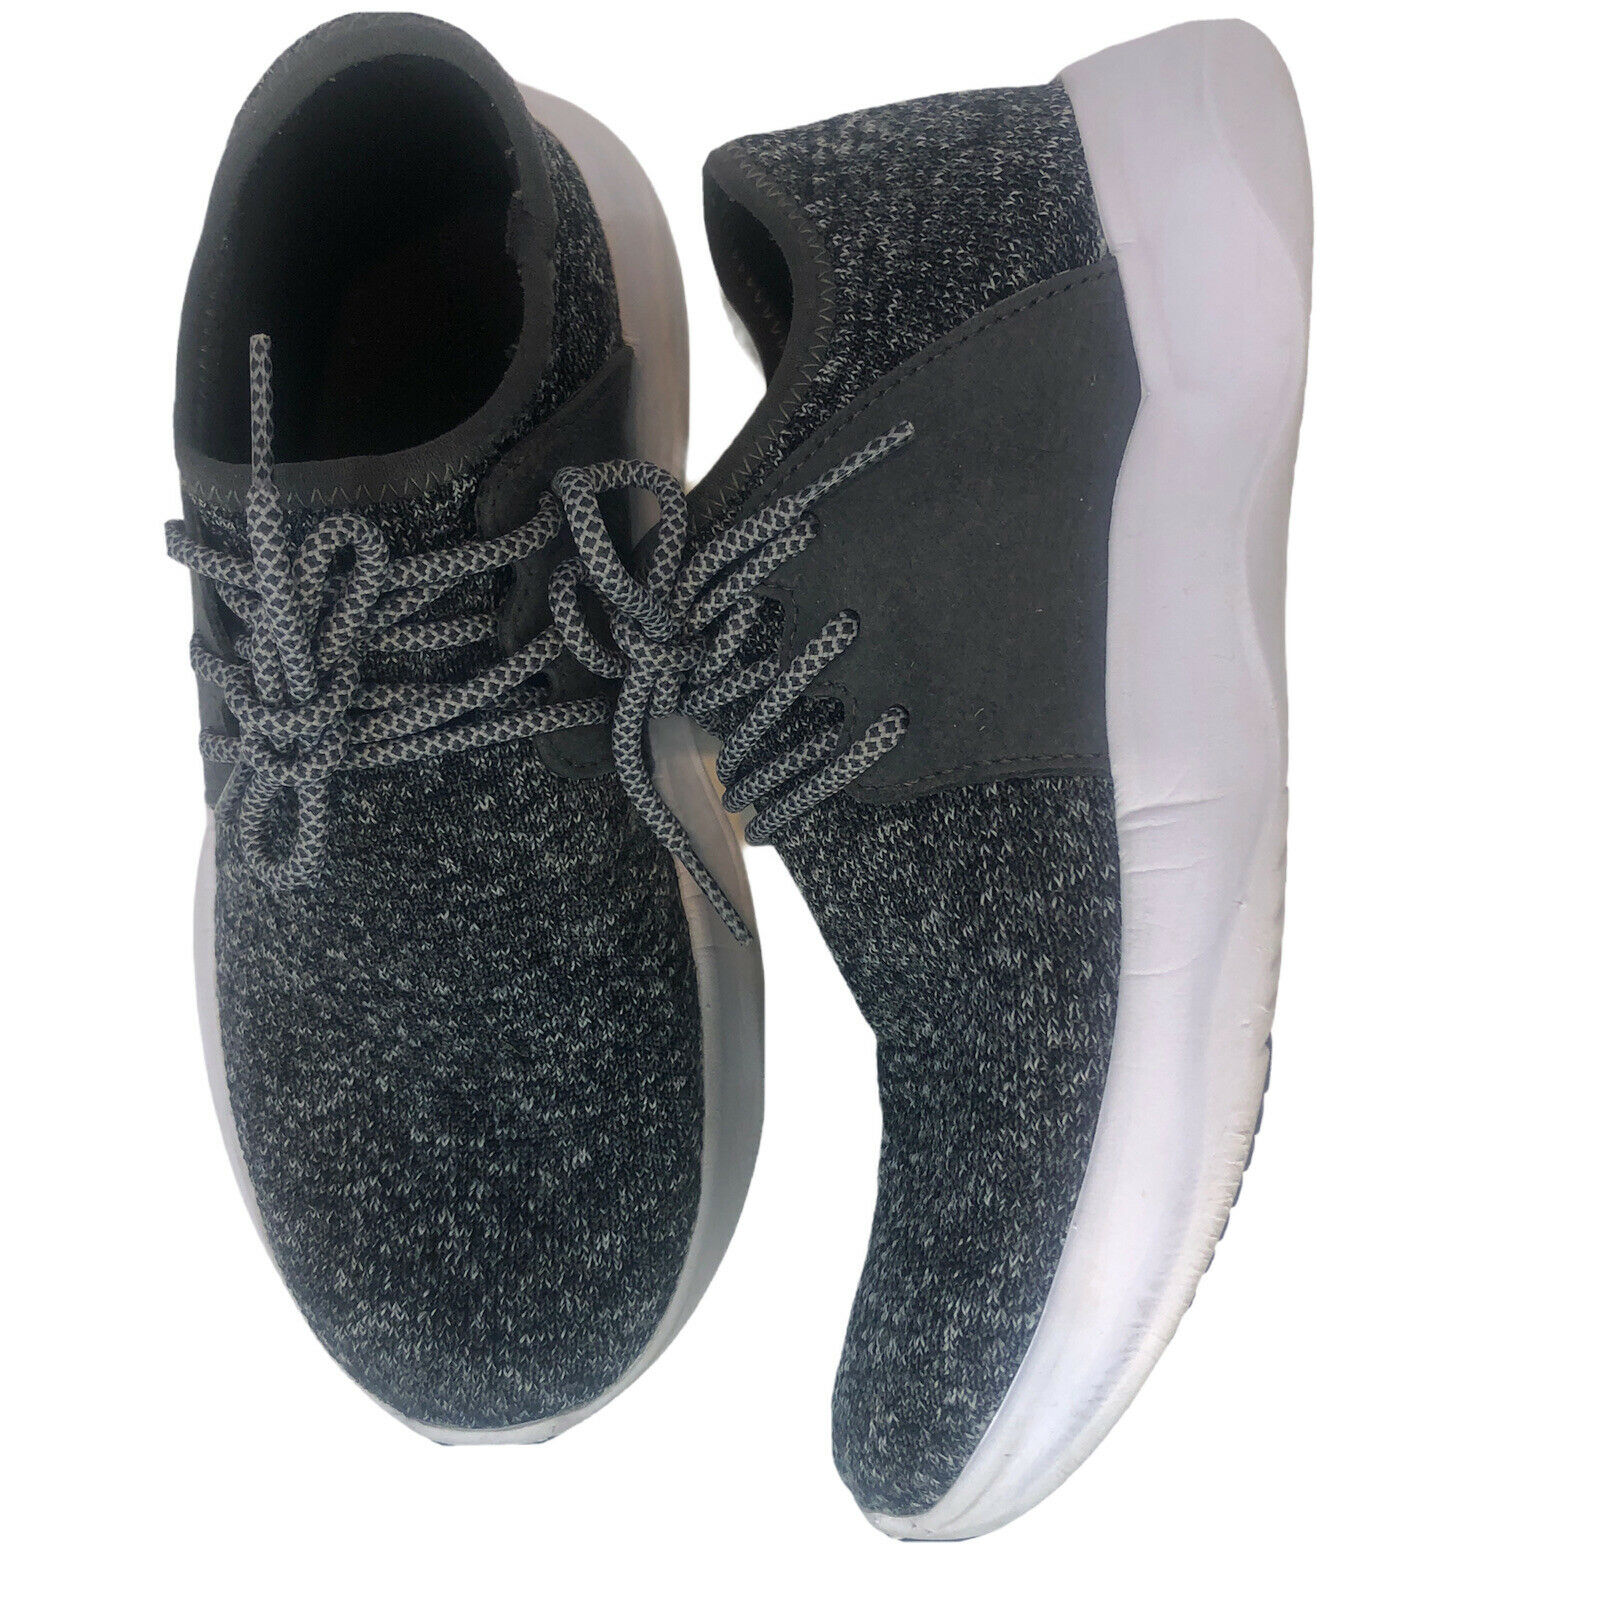 Vessi Everyday Sneakers Pebble Gray Waterproof Womens US 6 UK 4.5 EU 37.5 Shoes